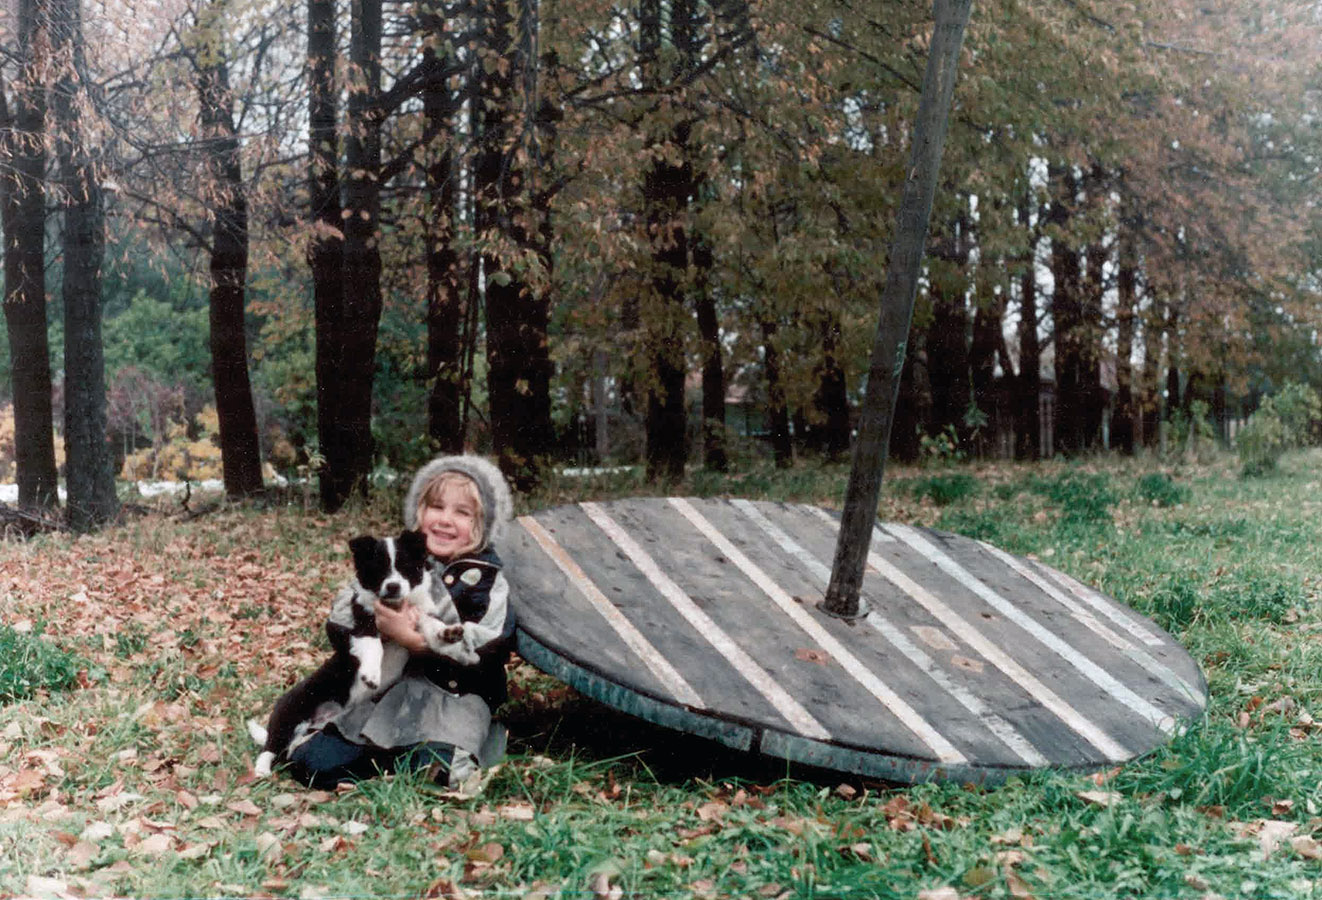 Владимир Говорков. "Юла", 1993. Дерево, металл, диаметр 170 см. Фото из архива Владимира Говоркова